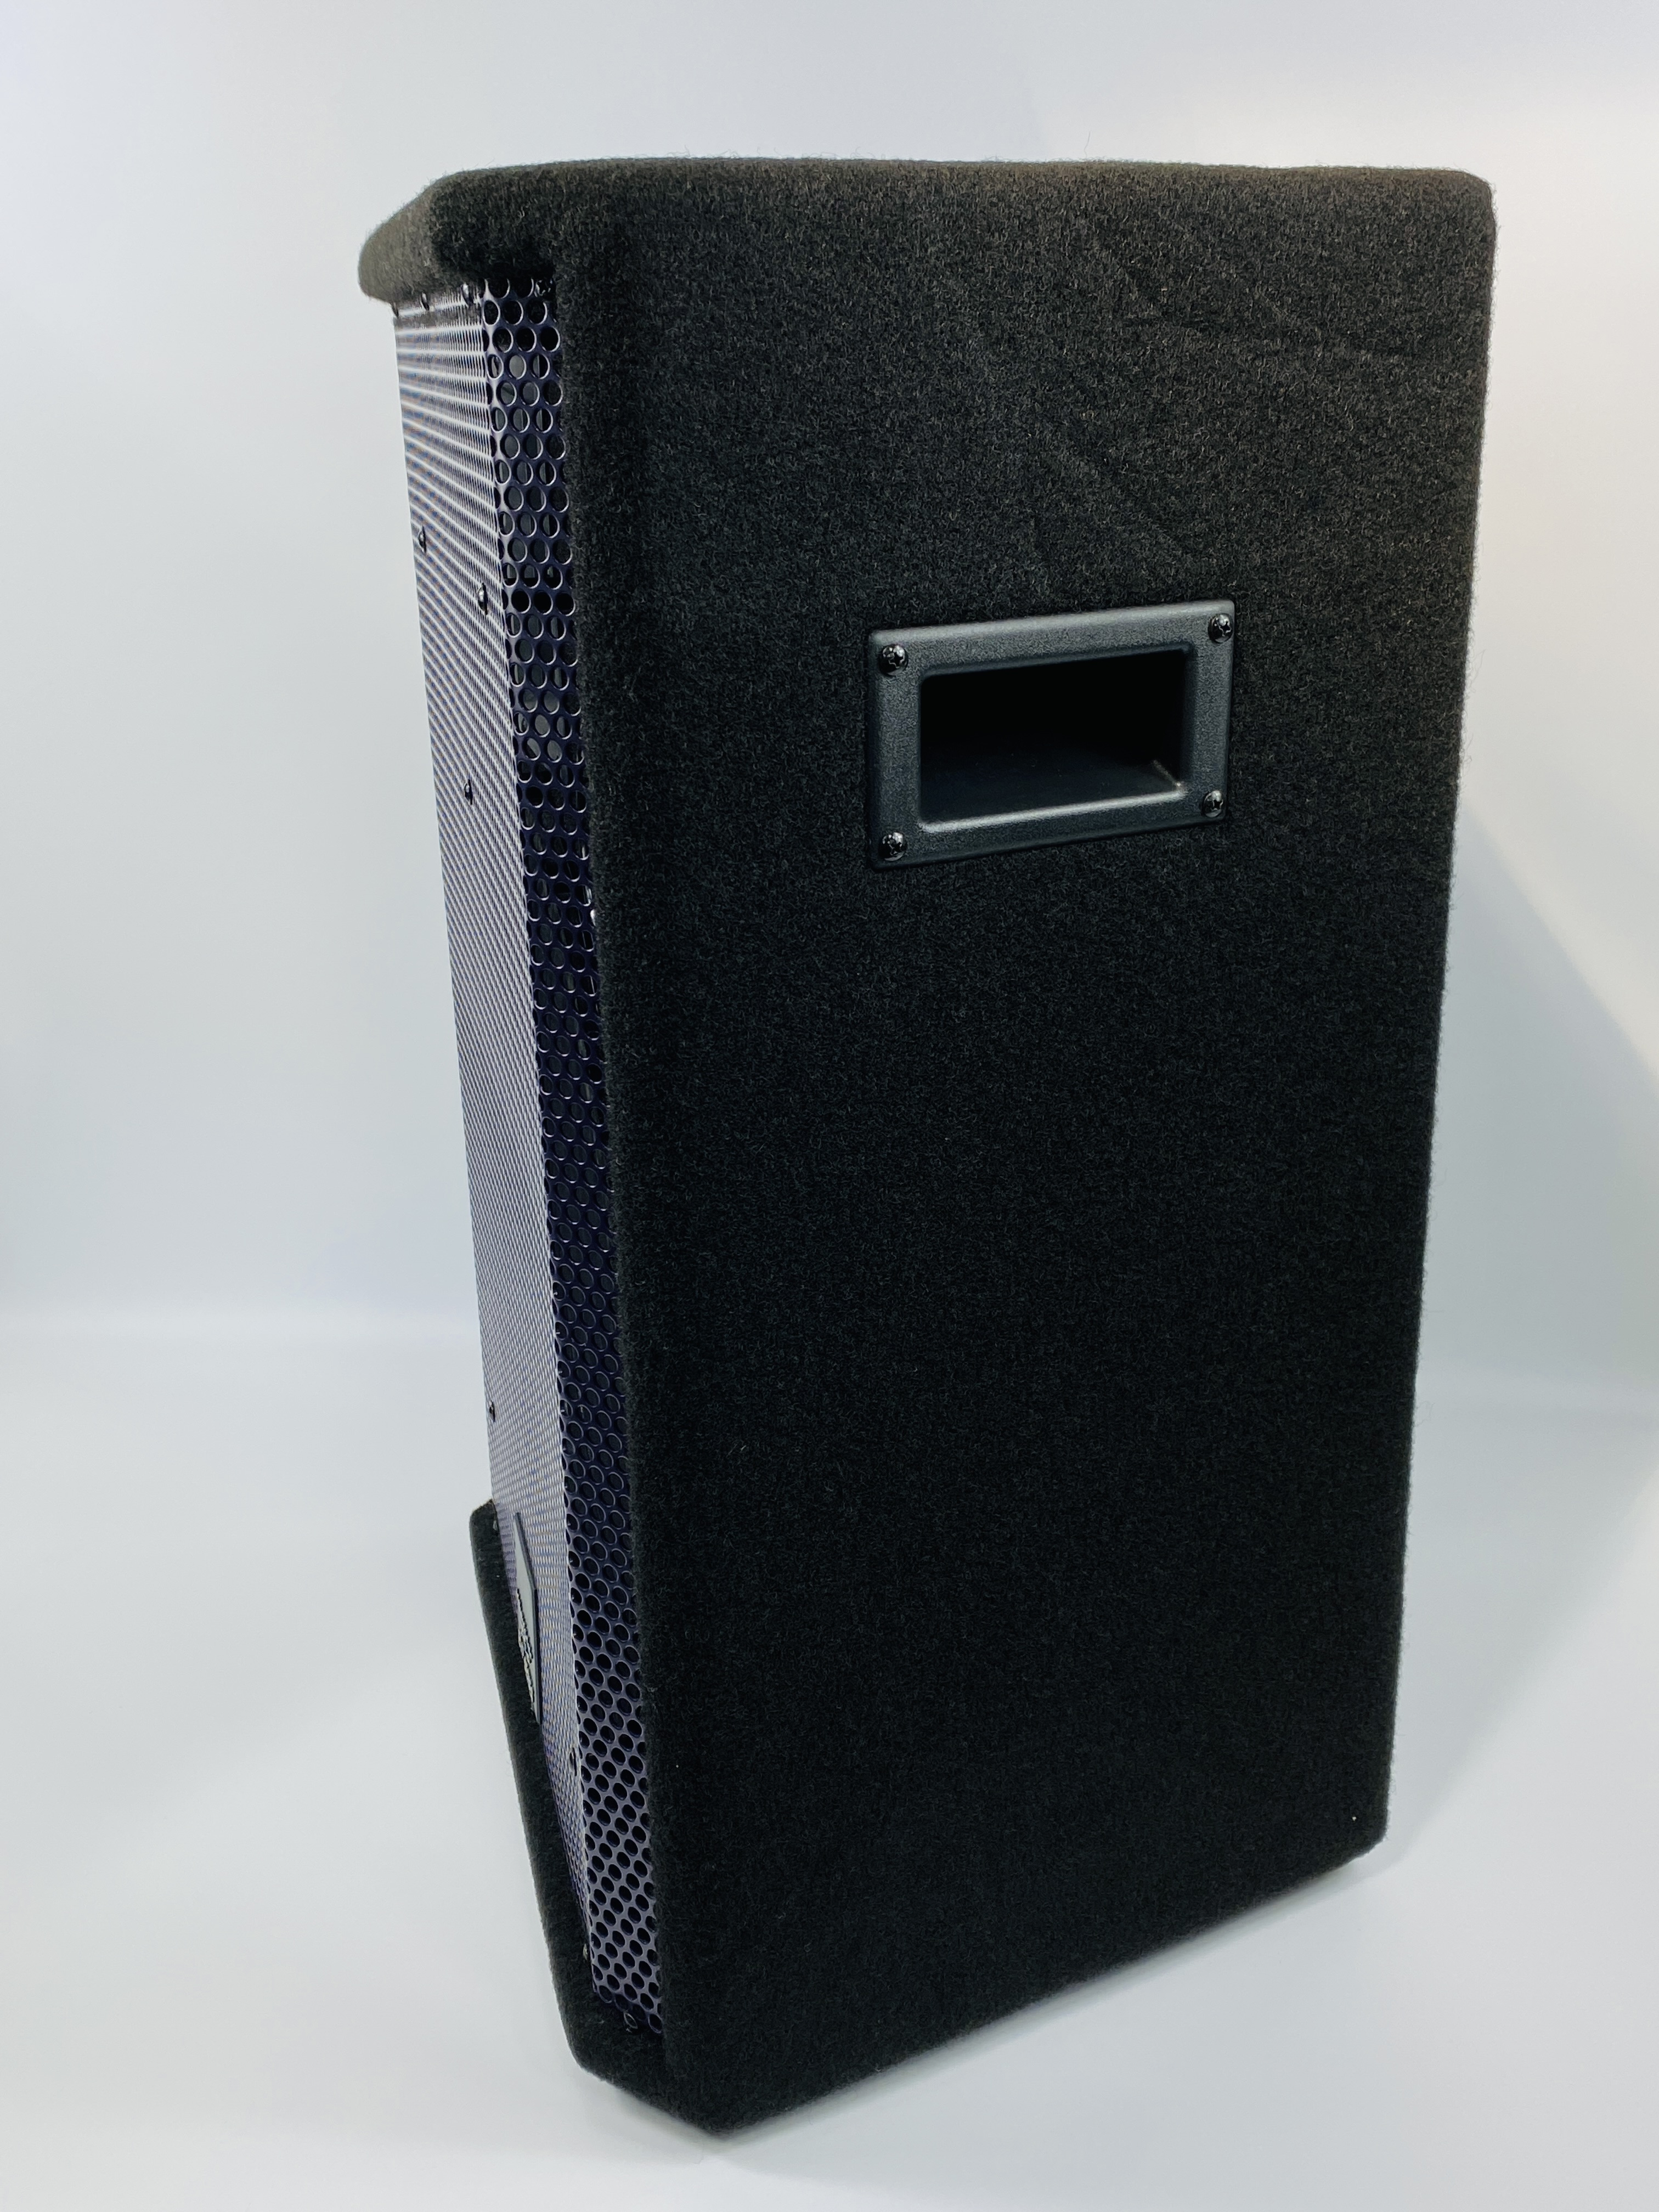 Boxed Wharfedale Pro EVP-15 speaker. - Image 2 of 5